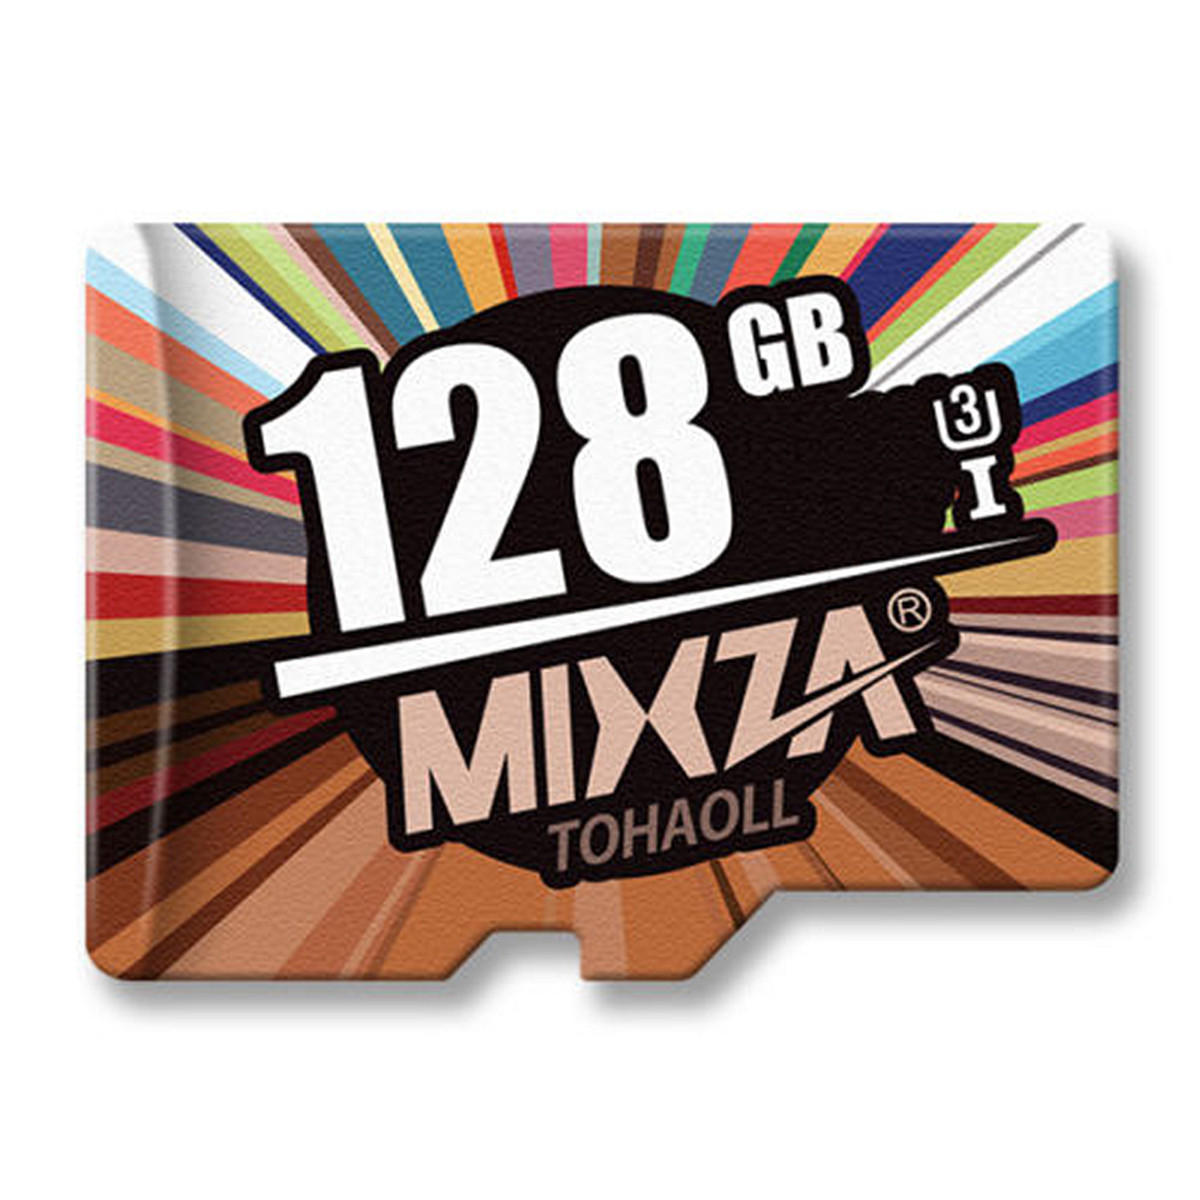 MIXZA Fashion Edition U3 Klasse 10 128GB TF Micro-geheugenkaart voor DSLR digitale camera MP3 HIFI S